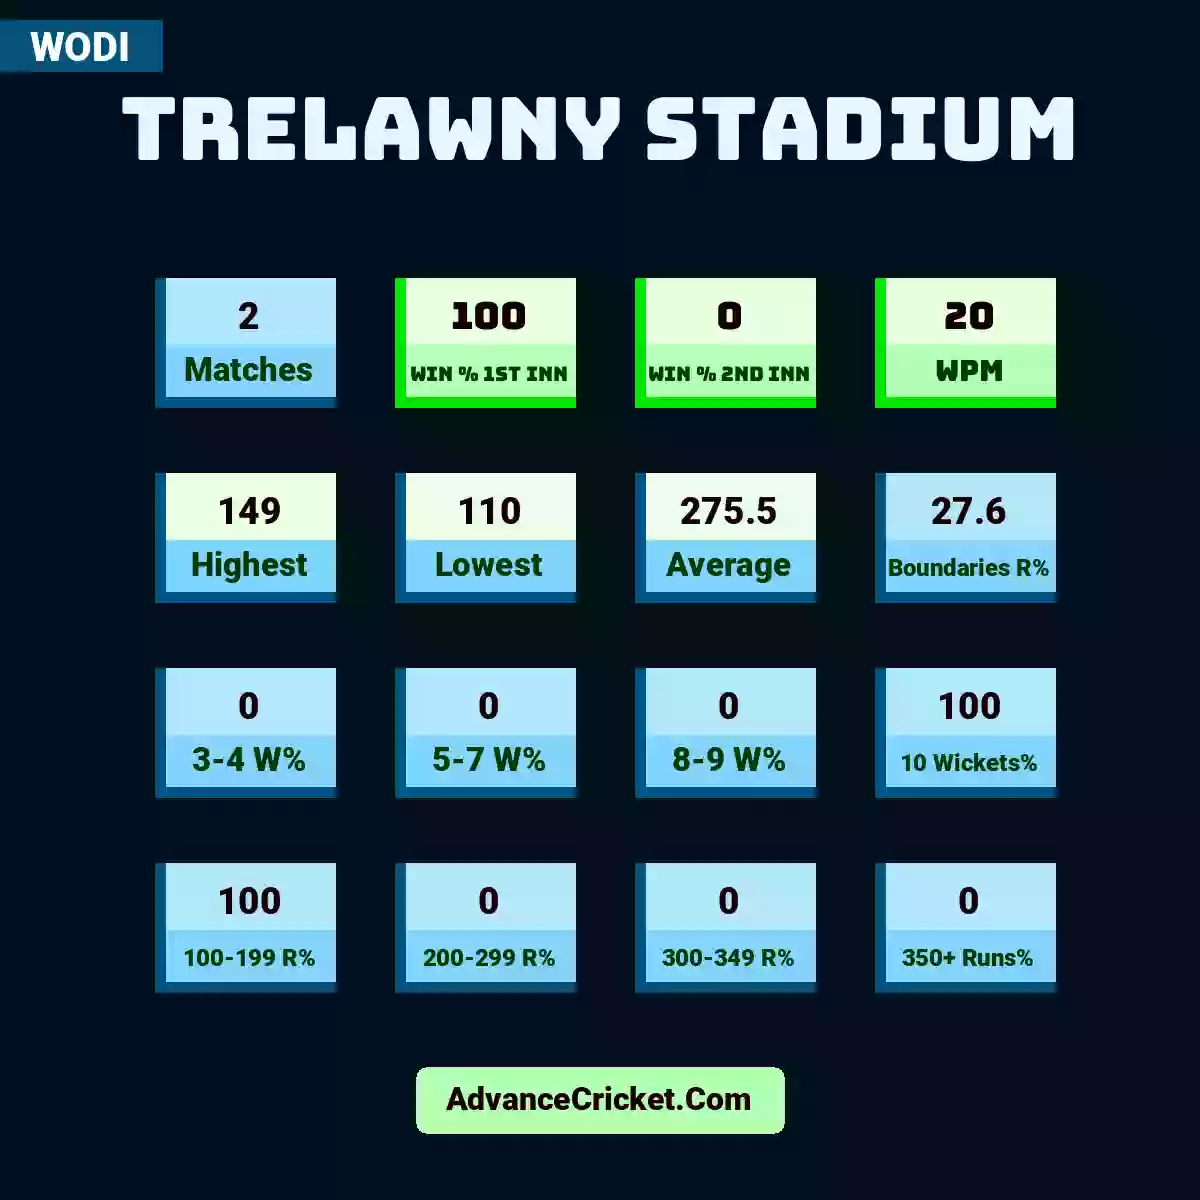 Image showing Trelawny Stadium with Matches: 2, Win % 1st Inn: 100, Win % 2nd Inn: 0, WPM: 20, Highest: 149, Lowest: 110, Average: 275.5, Boundaries R%: 27.6, 3-4 W%: 0, 5-7 W%: 0, 8-9 W%: 0, 10 Wickets%: 100, 100-199 R%: 100, 200-299 R%: 0, 300-349 R%: 0, 350+ Runs%: 0.